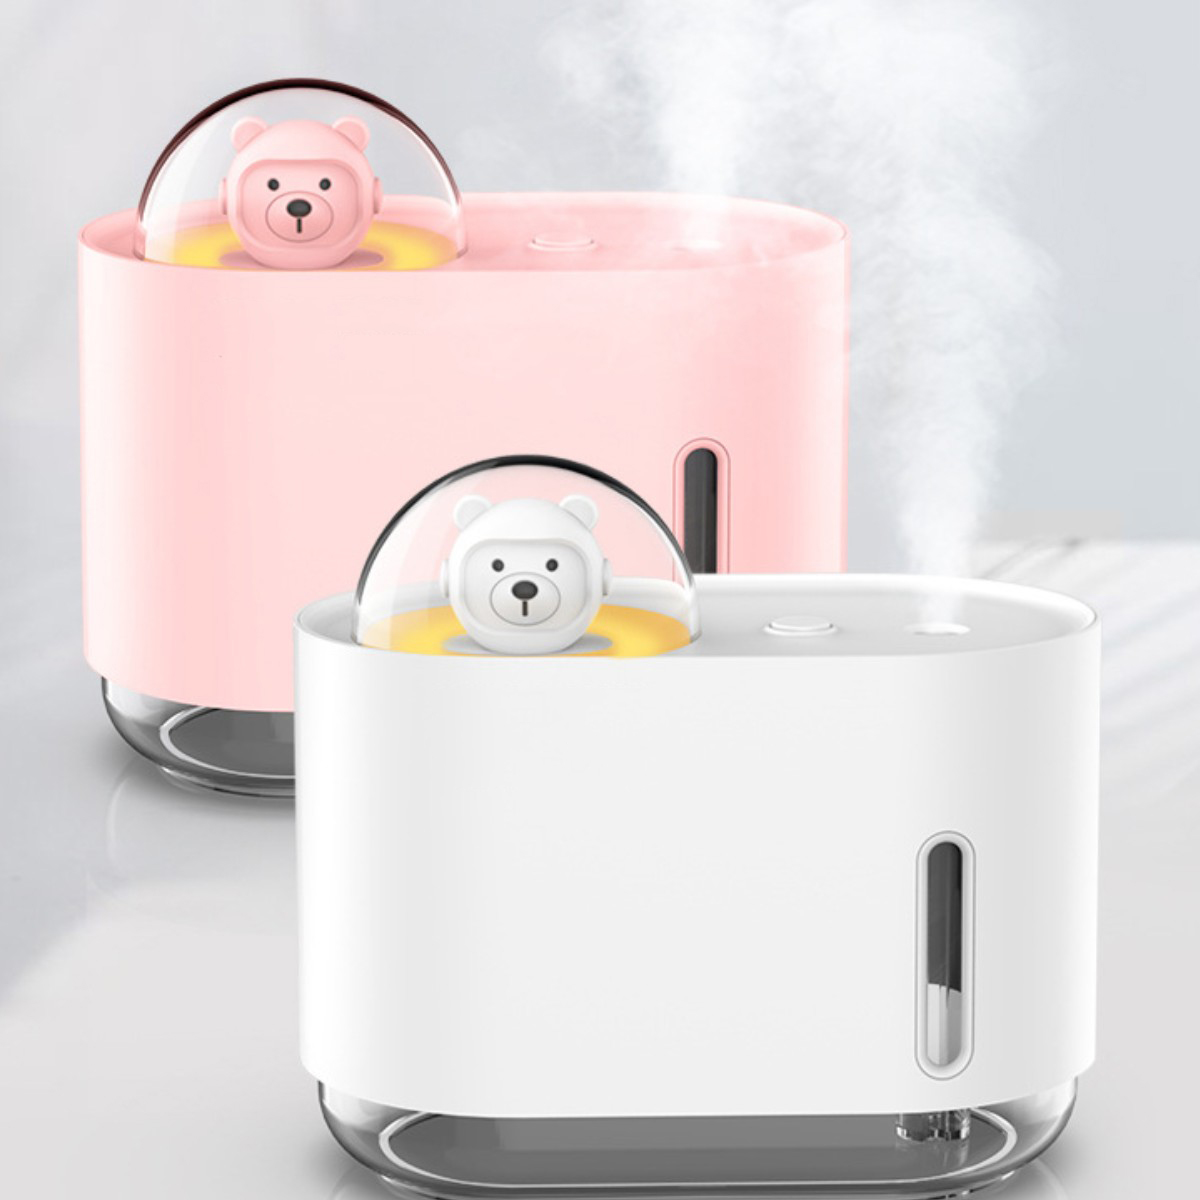 SYNTEK Luftbefeuchter Adorable Air Luftbefeuchter Raumgröße: Space Mist Nightlight (2 m²) Watt, 10 Humidifier Pink Rosa Mini Bear Desktop